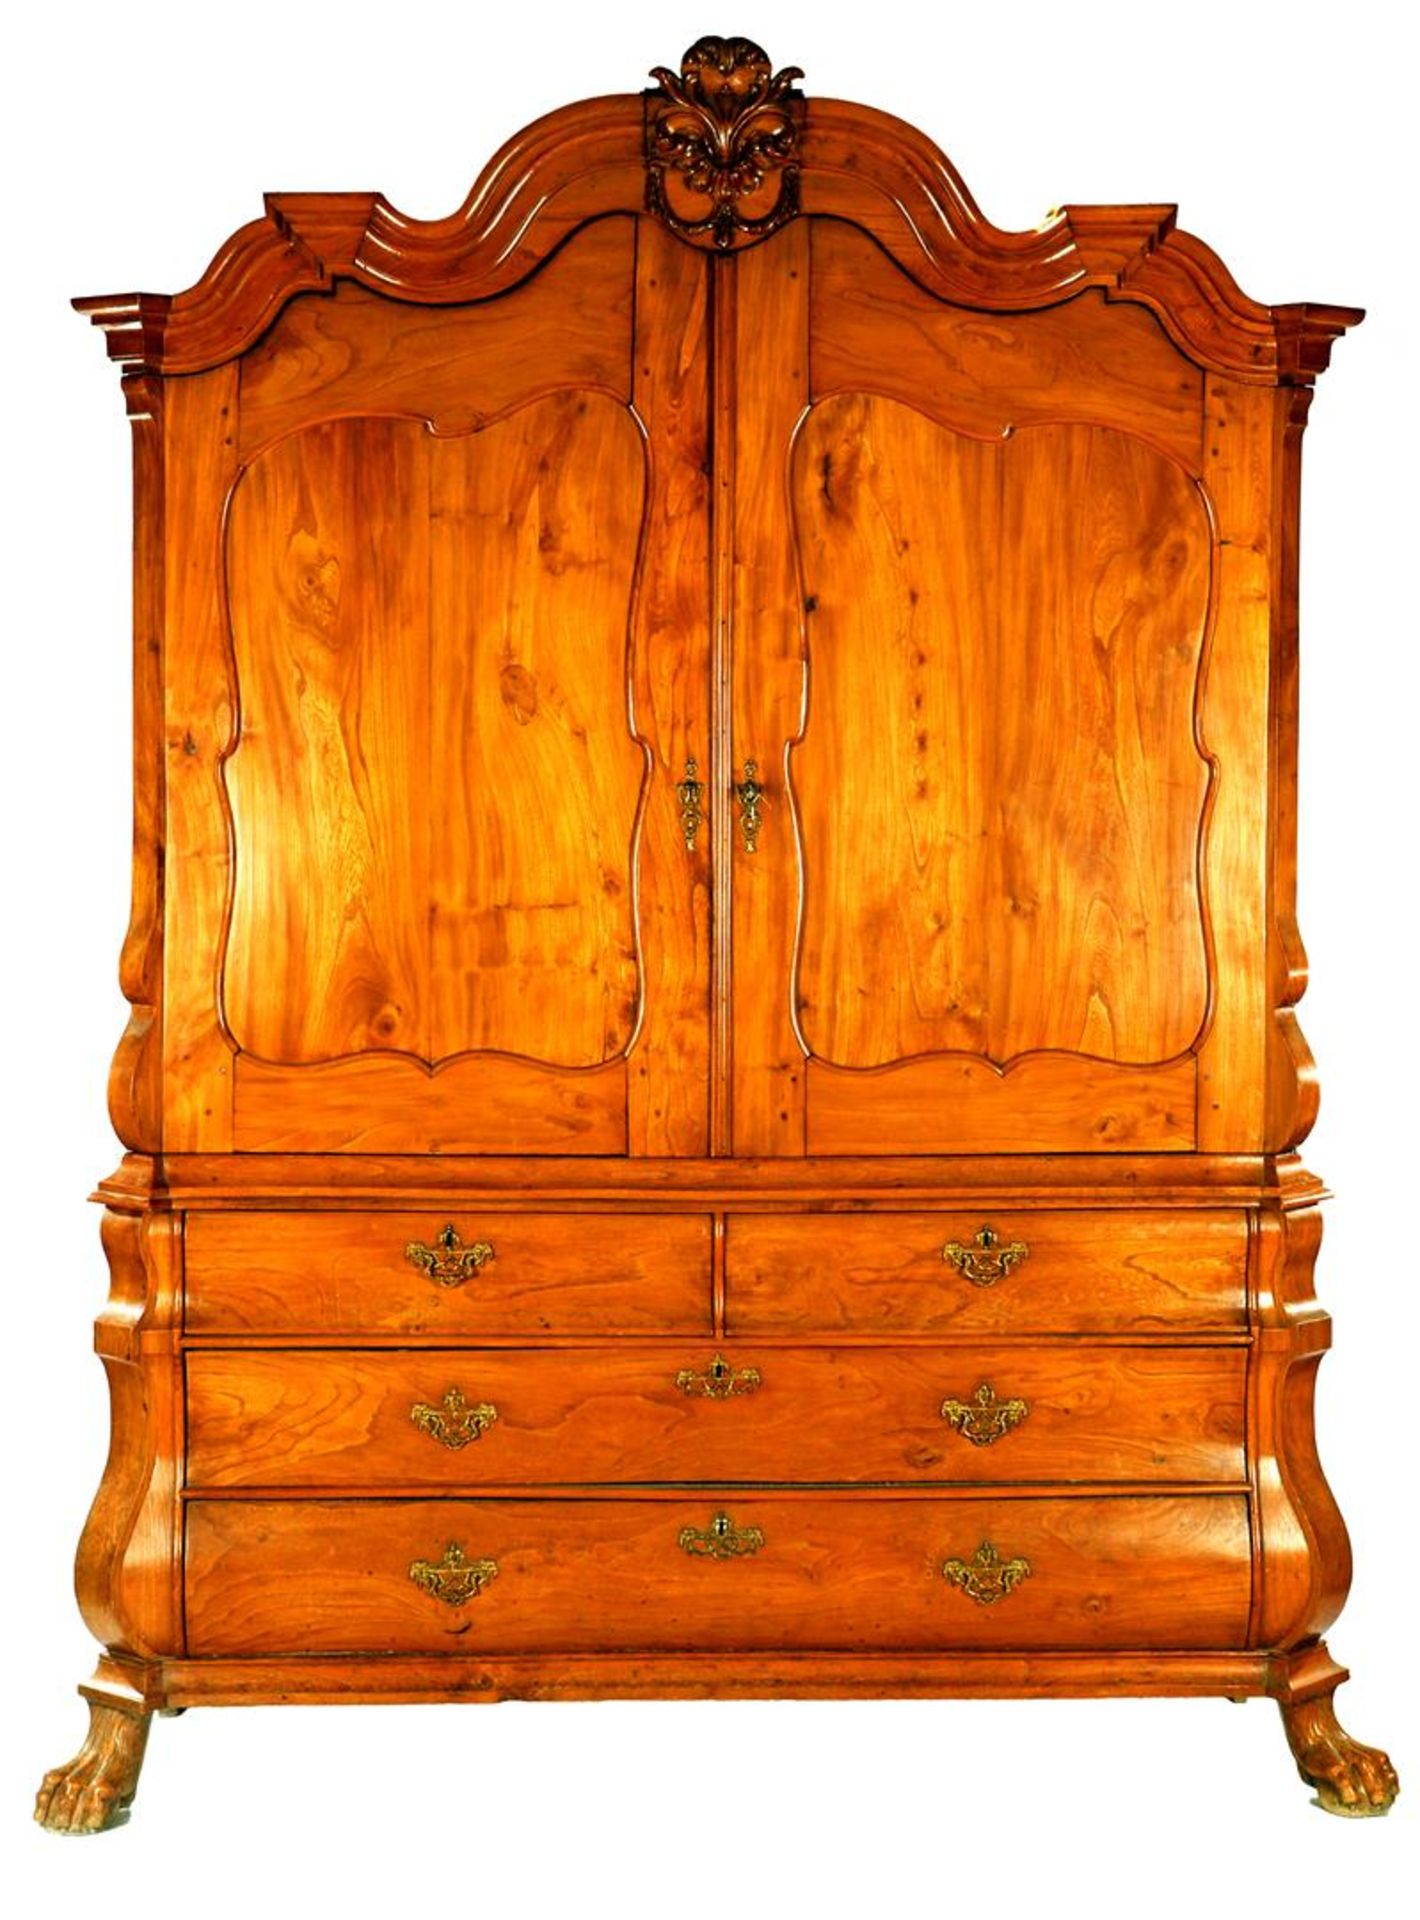 Fruit wood veneer on oak Dutch cabinet, with fine carving